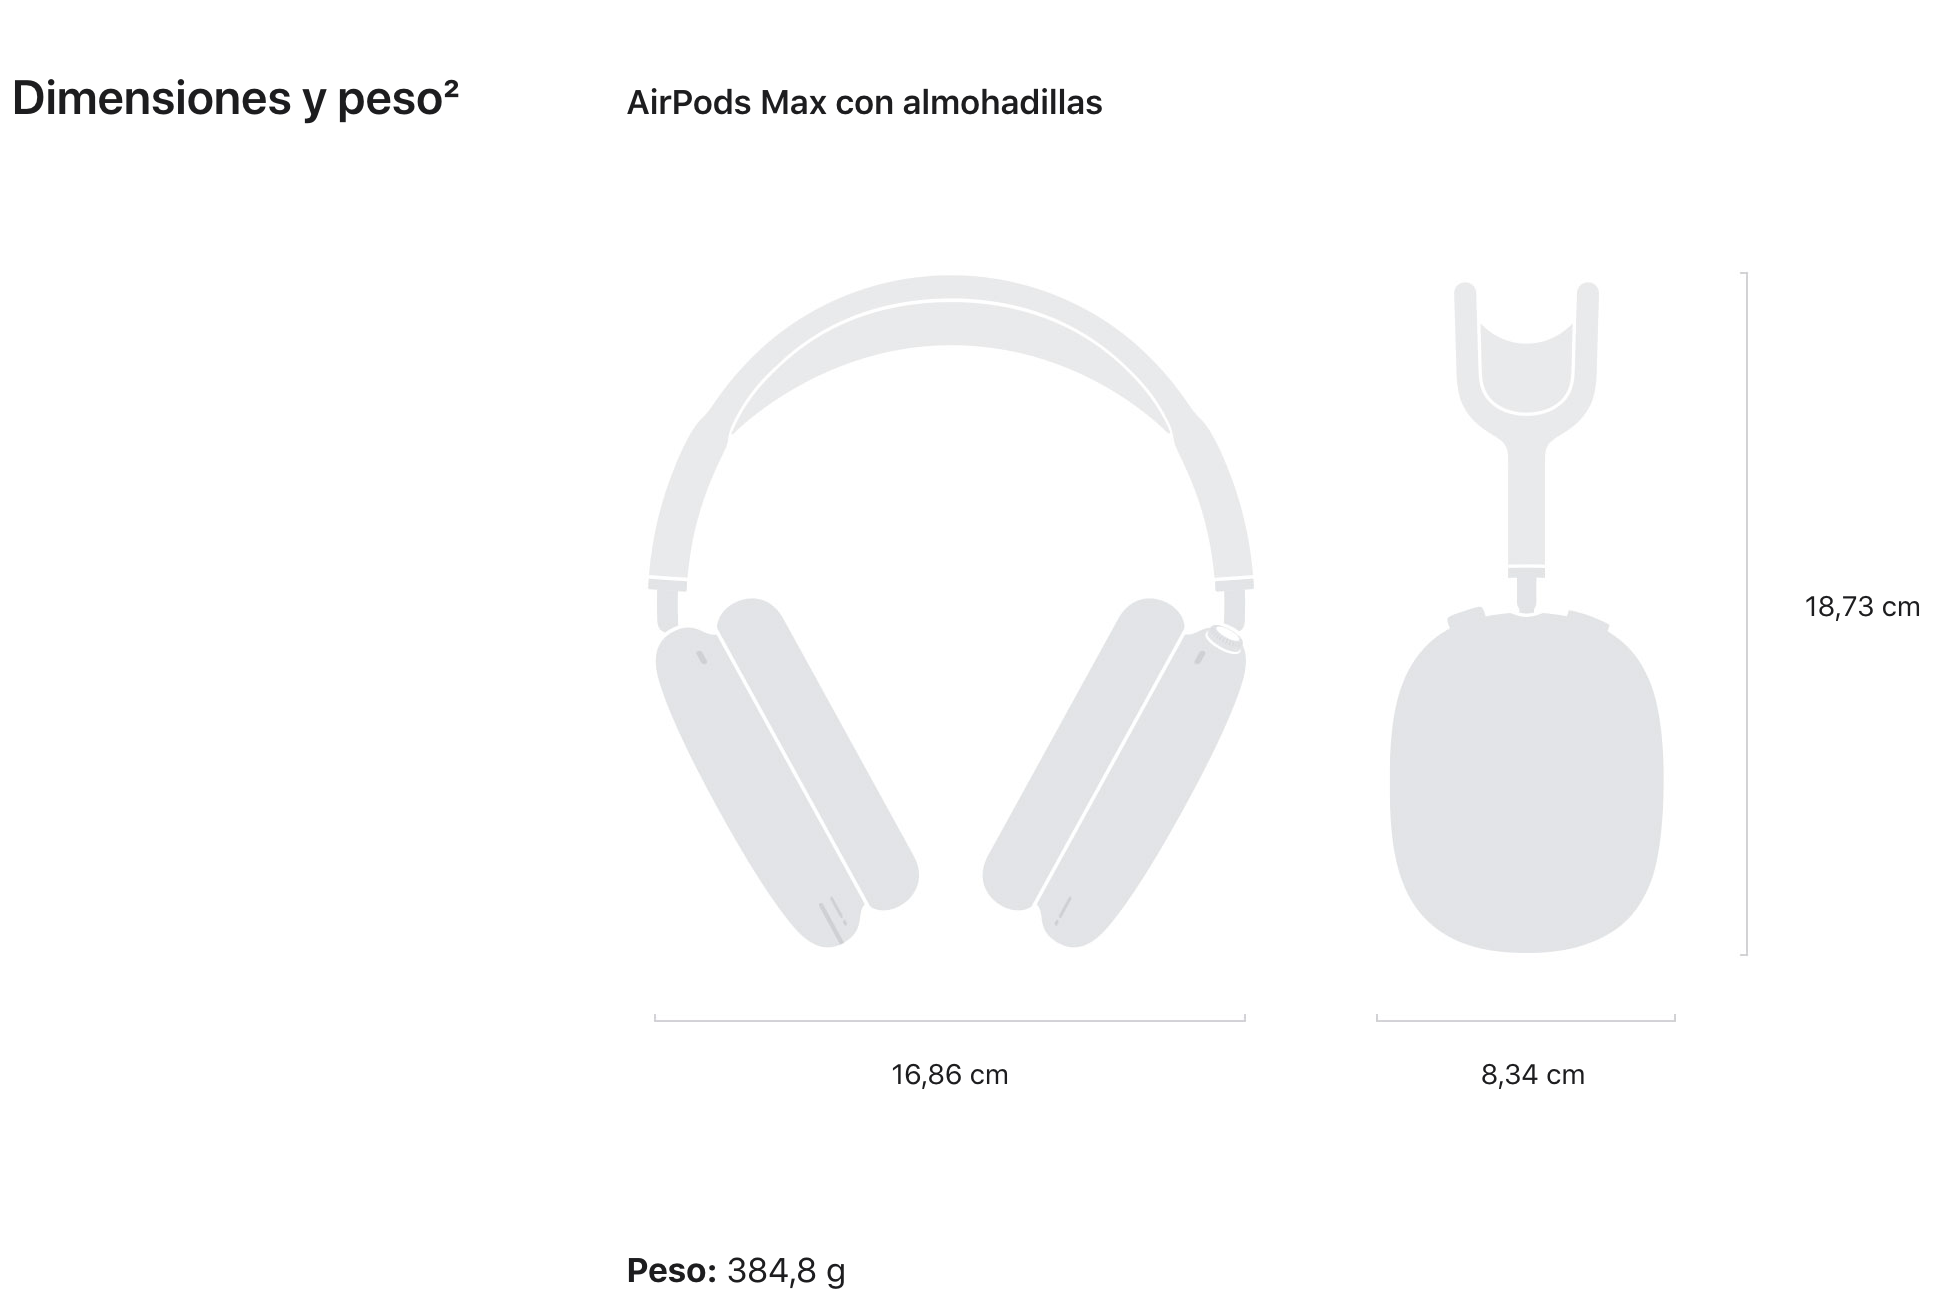 Вес наушников pro. Наушники айрподс Макс. AIRPODS Pro 2 вес наушников. Apple AIRPODS 2 схема наушников. Габариты AIRPODS Max.